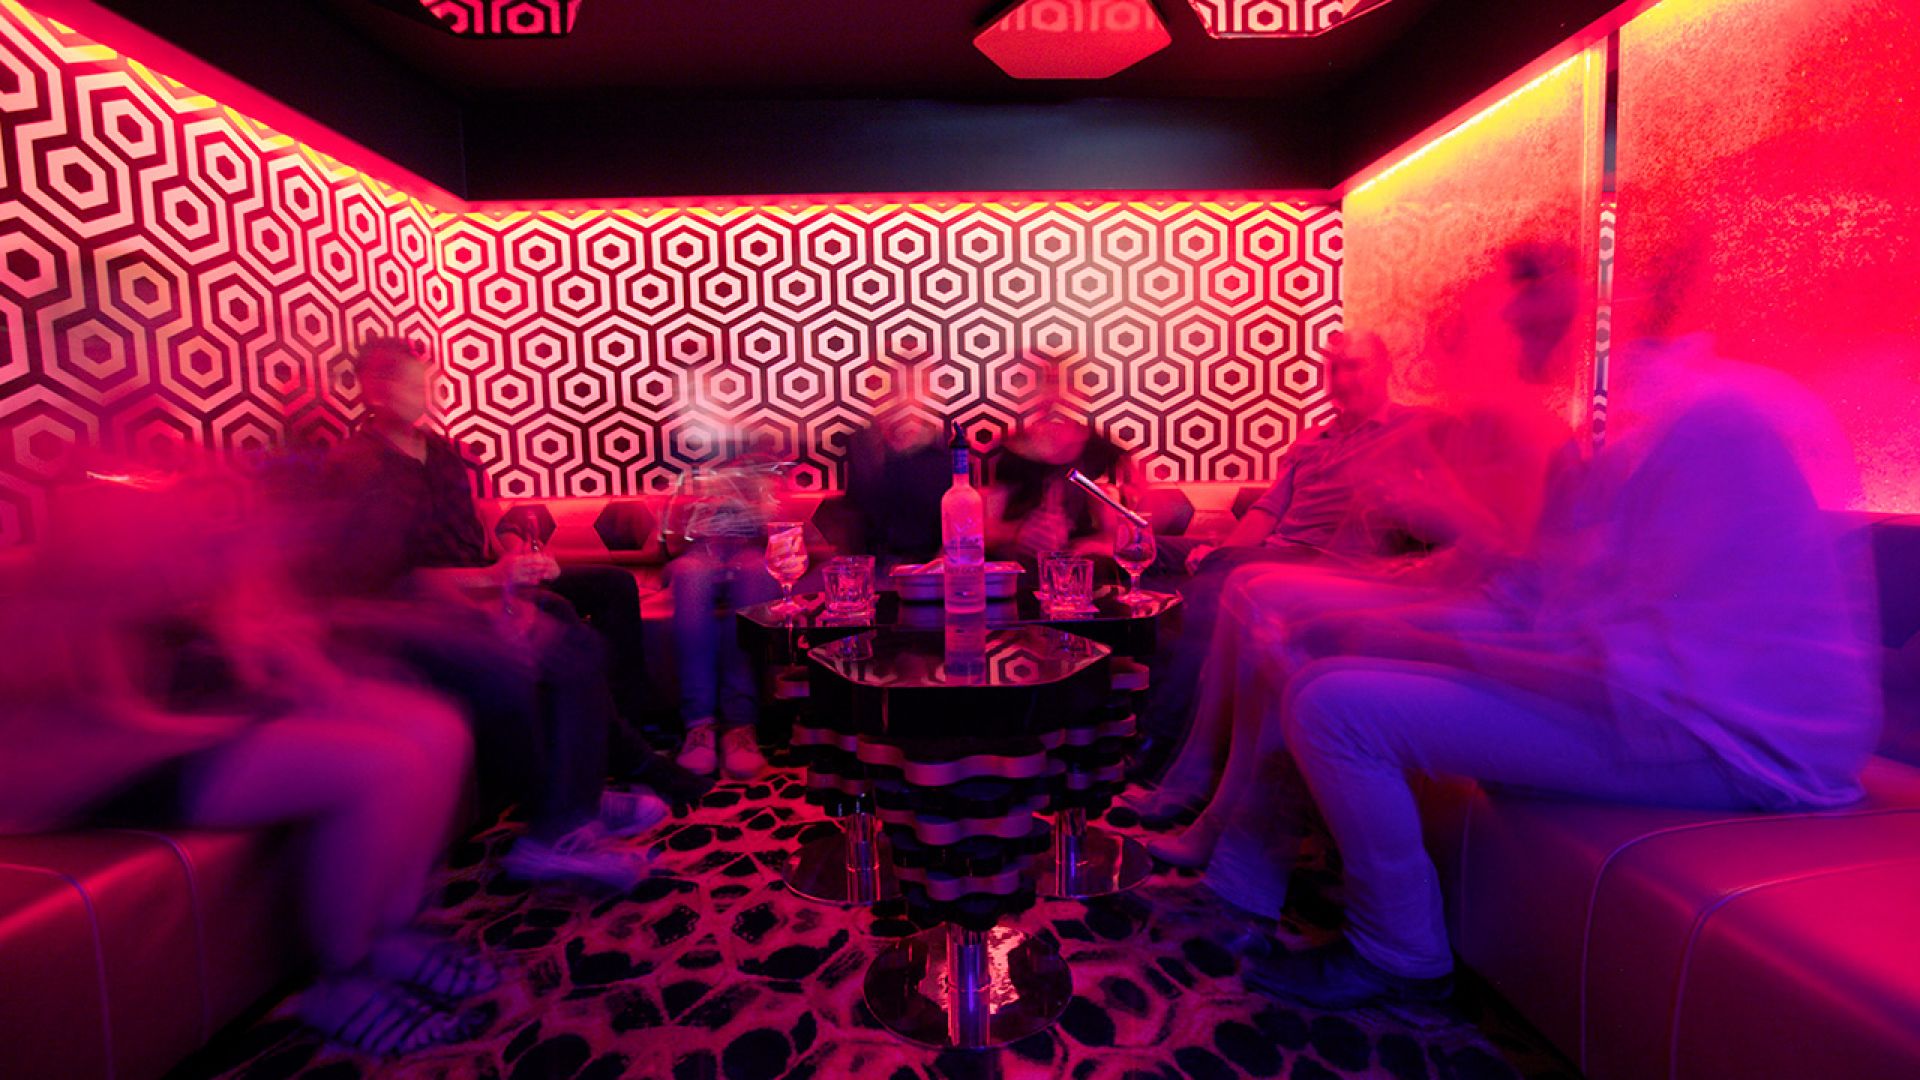 Strip clubs in lawrence kansas - 🧡 Pure - Strip Club - Kansas City (816) ....